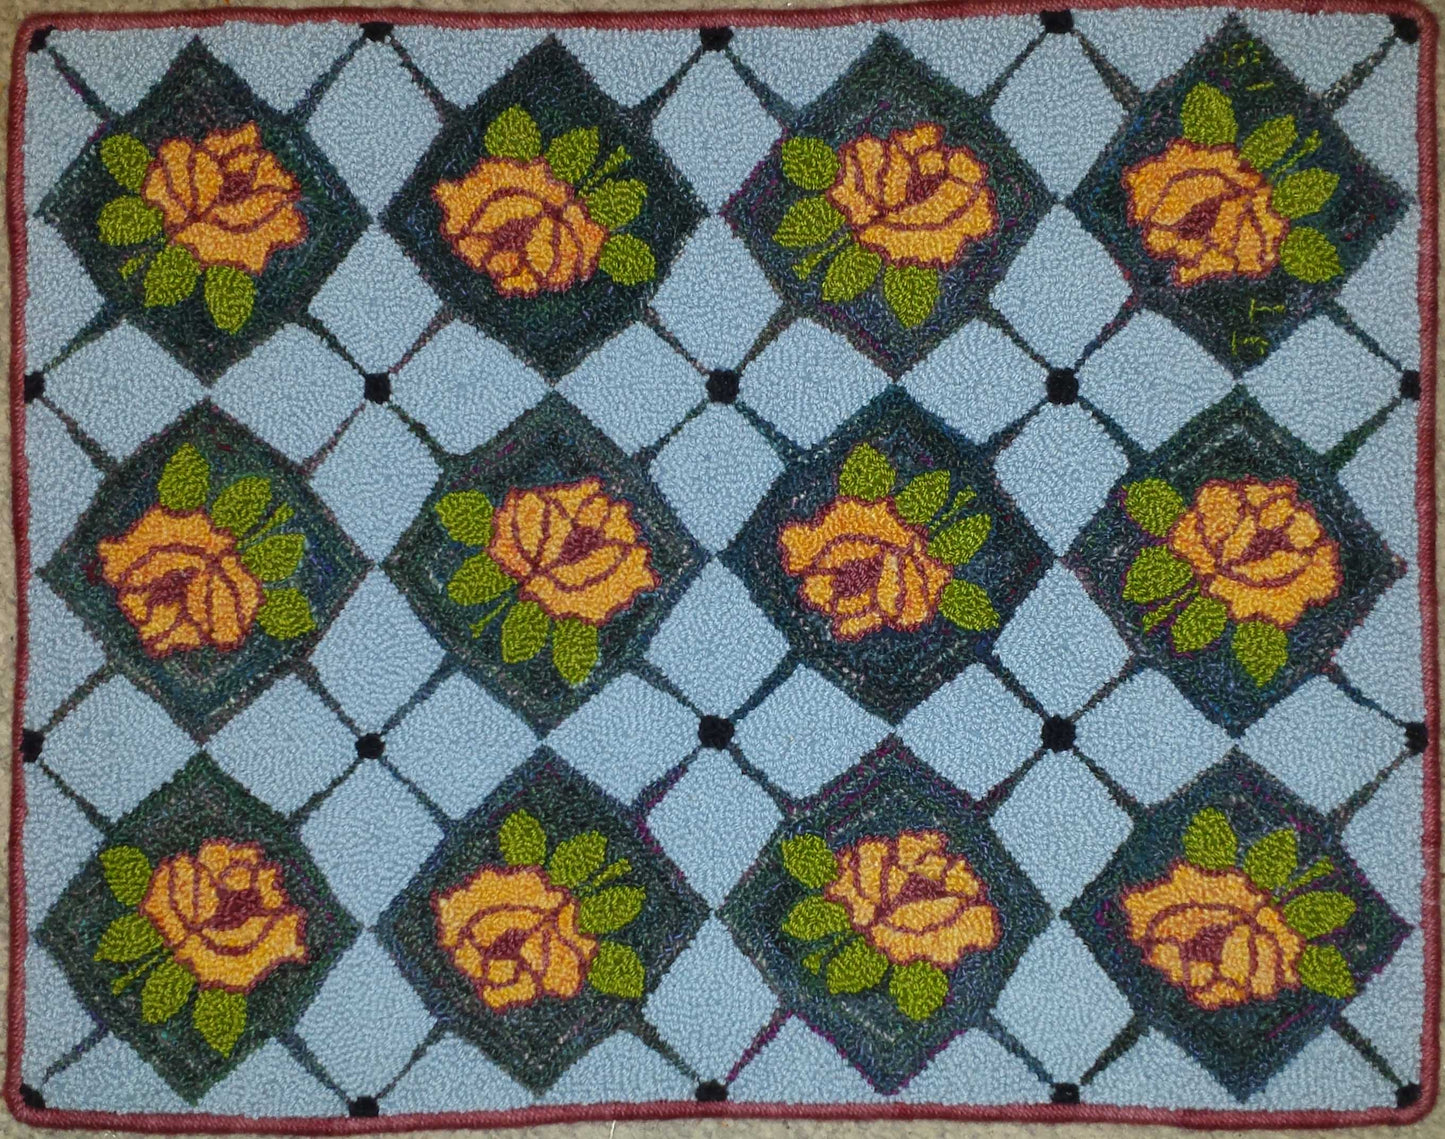 Roses & Diamonds Pattern on linen, 26.5"x21" SALE 20% off!